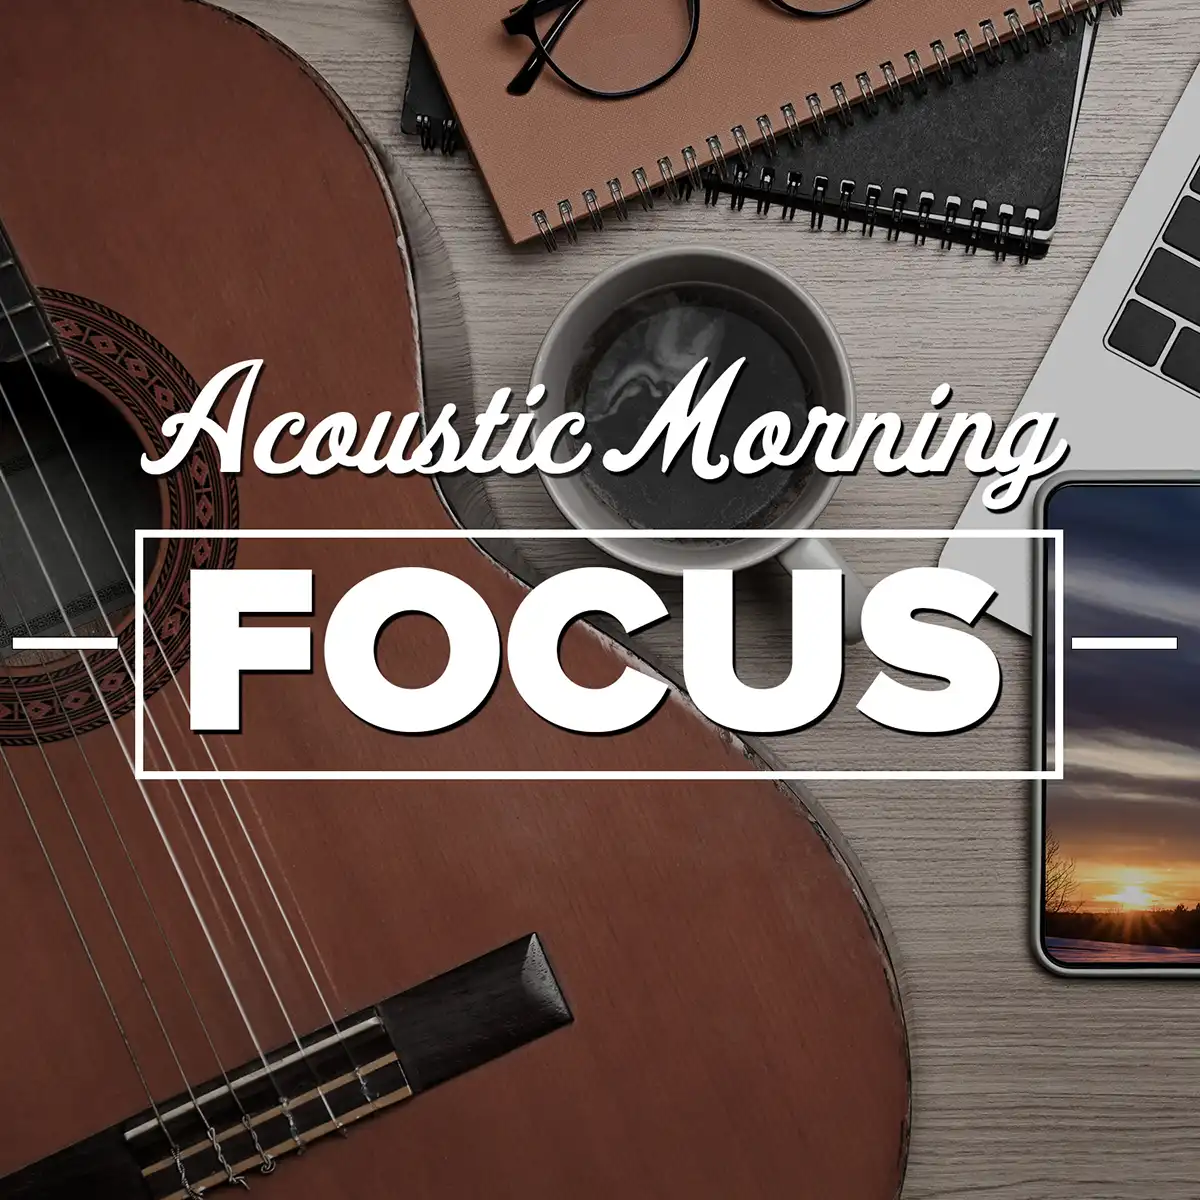 acoustic-morning-focus-final-b